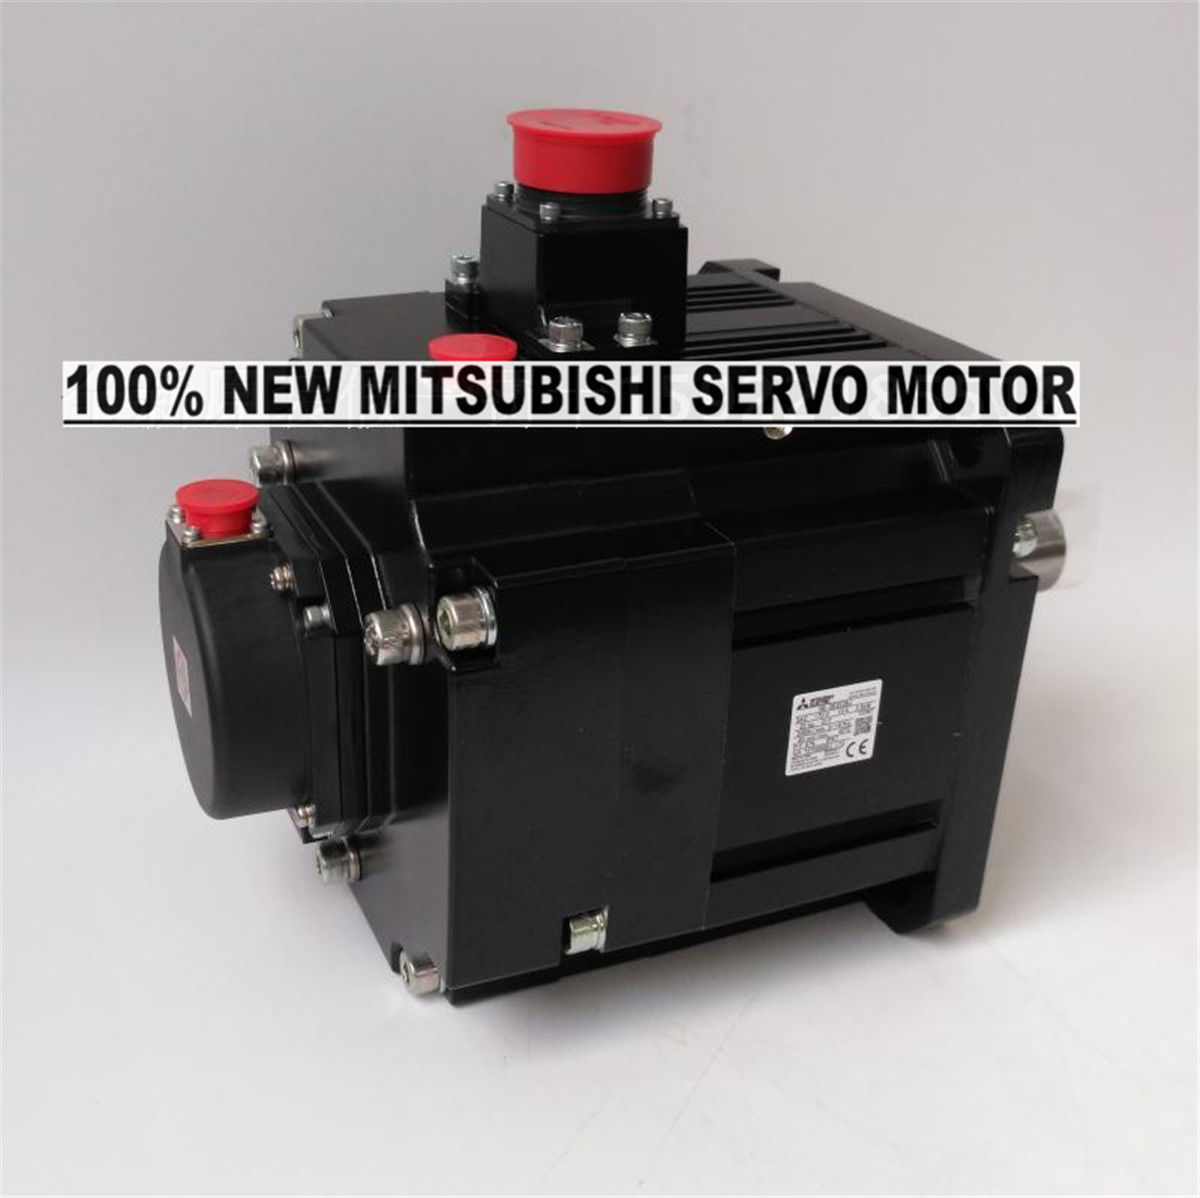 Brand NEW Mitsubishi Servo Motor HG-SR352BJ in box HGSR352BJ - zum Schließen ins Bild klicken